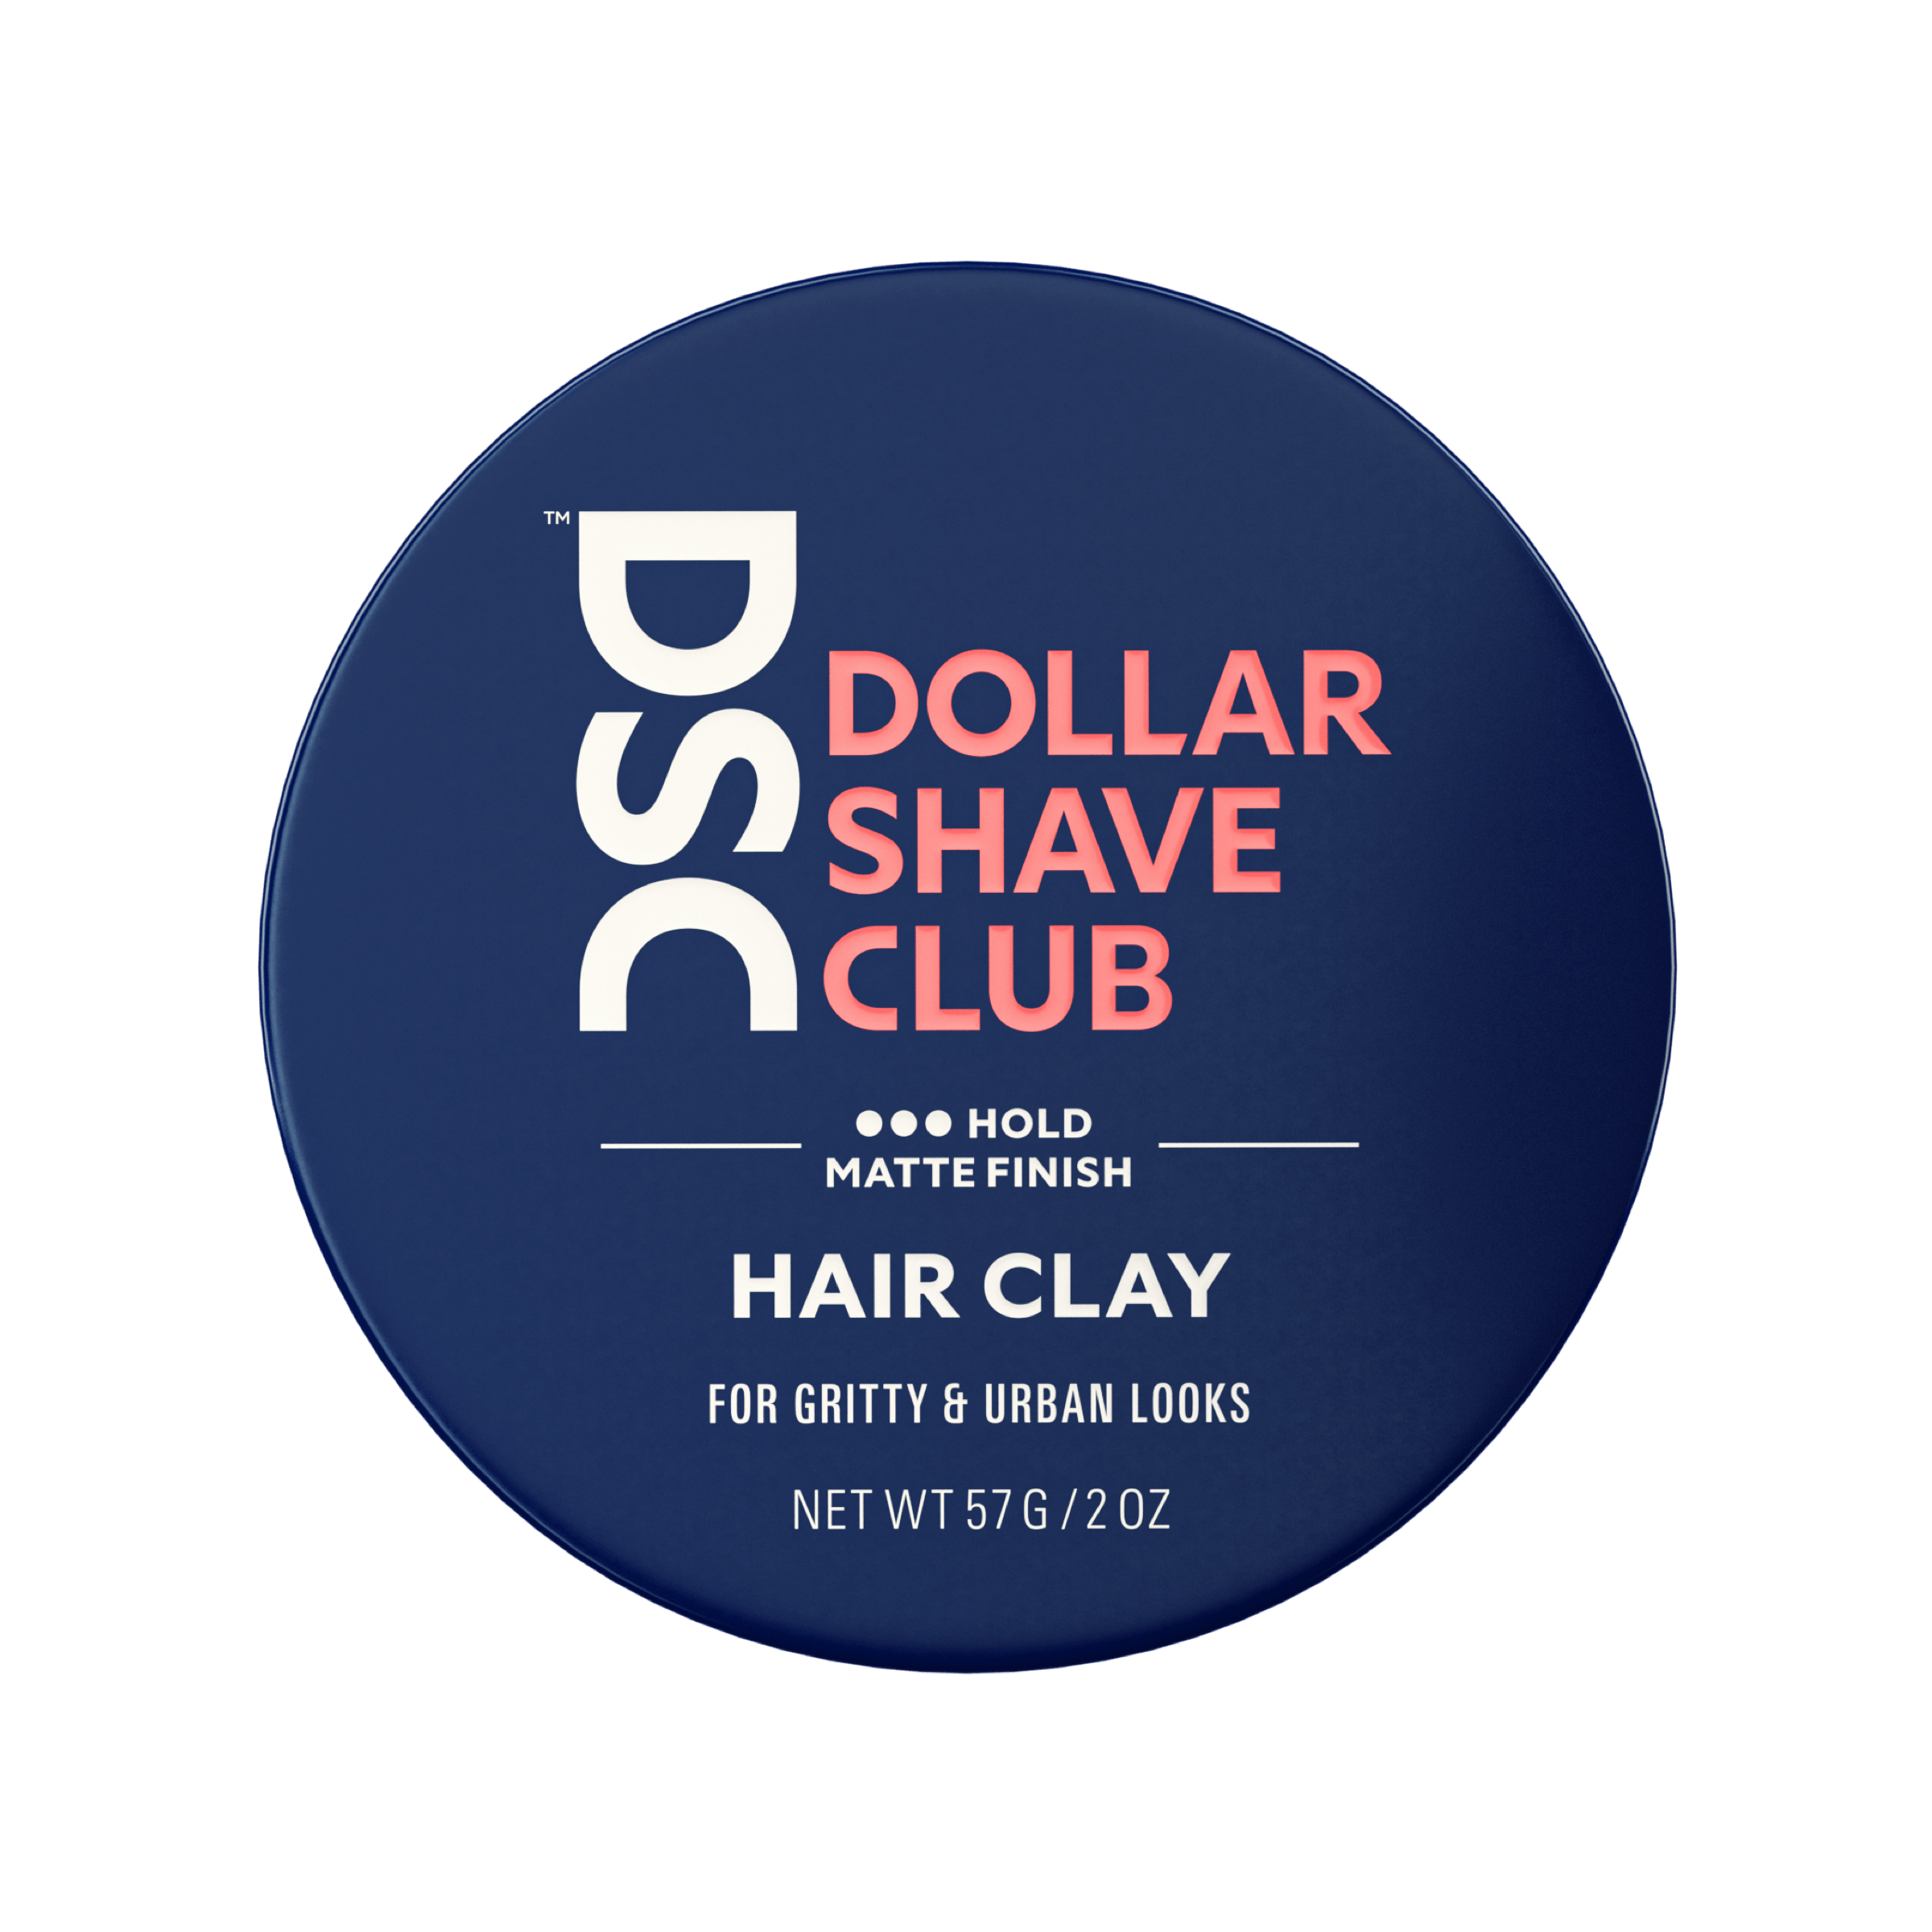 Dollar Shave Club Hair Clay against blank backdrop.